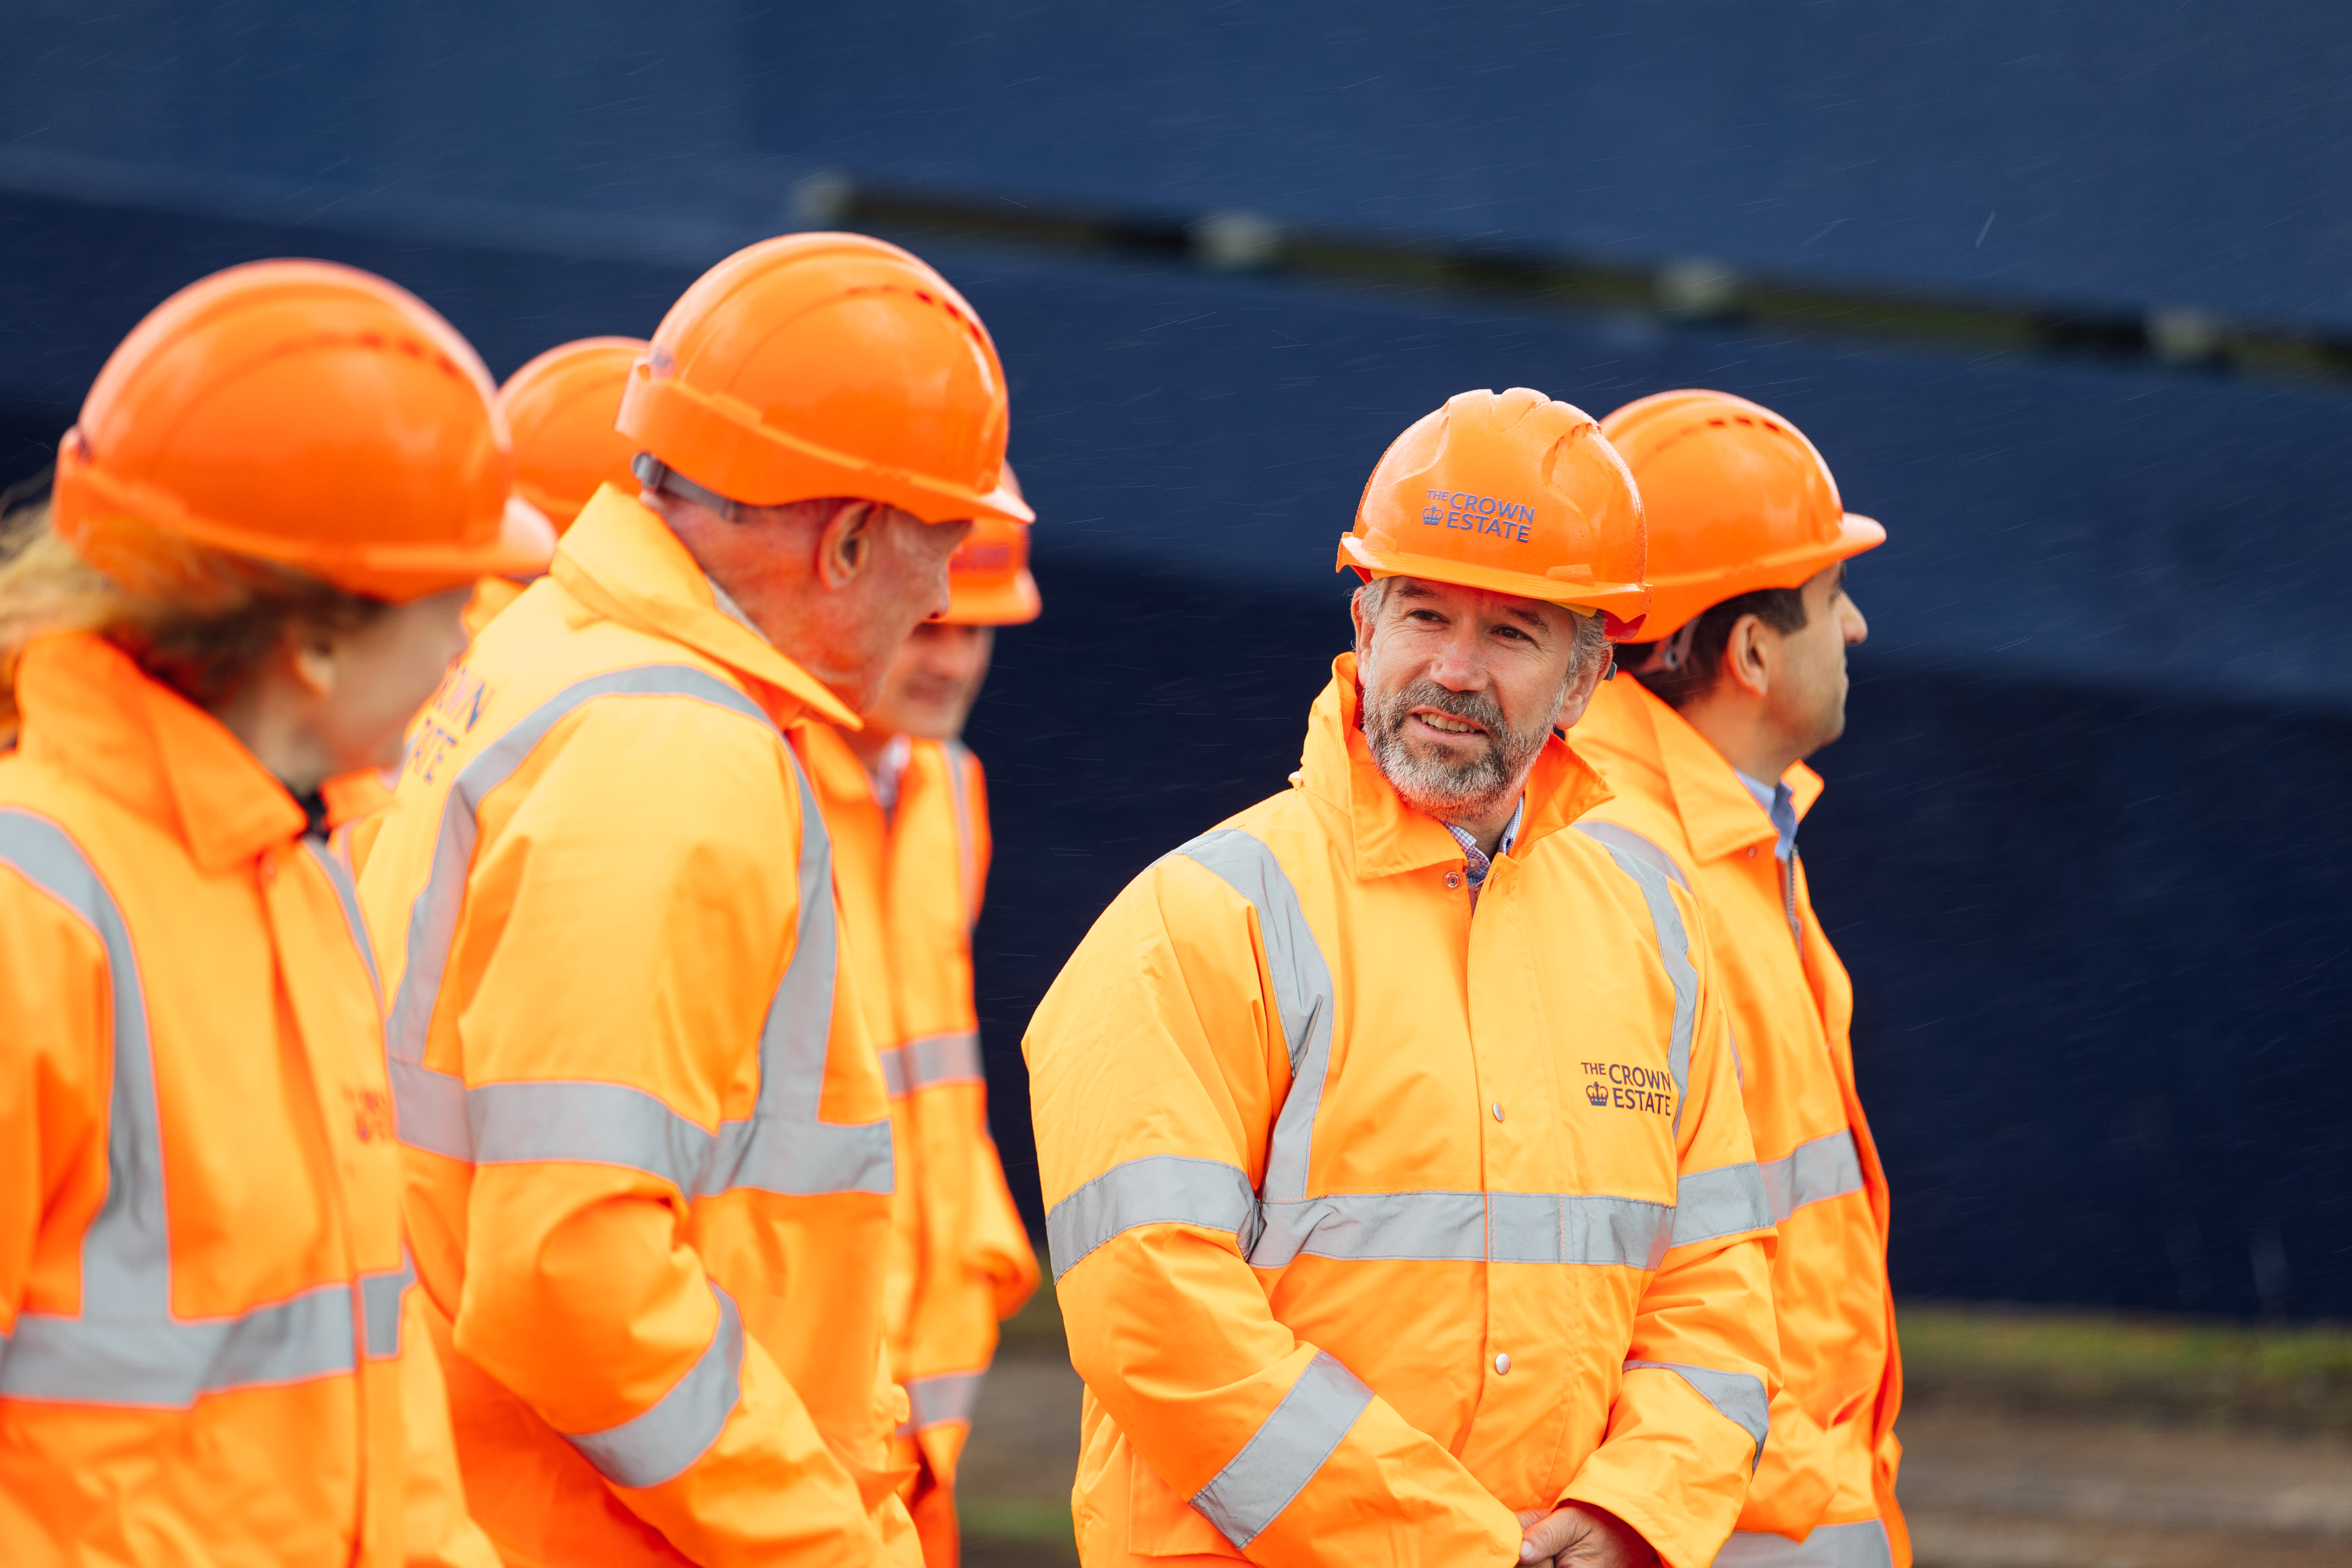 Group of surveyors in orange high viz jackets and hard hats